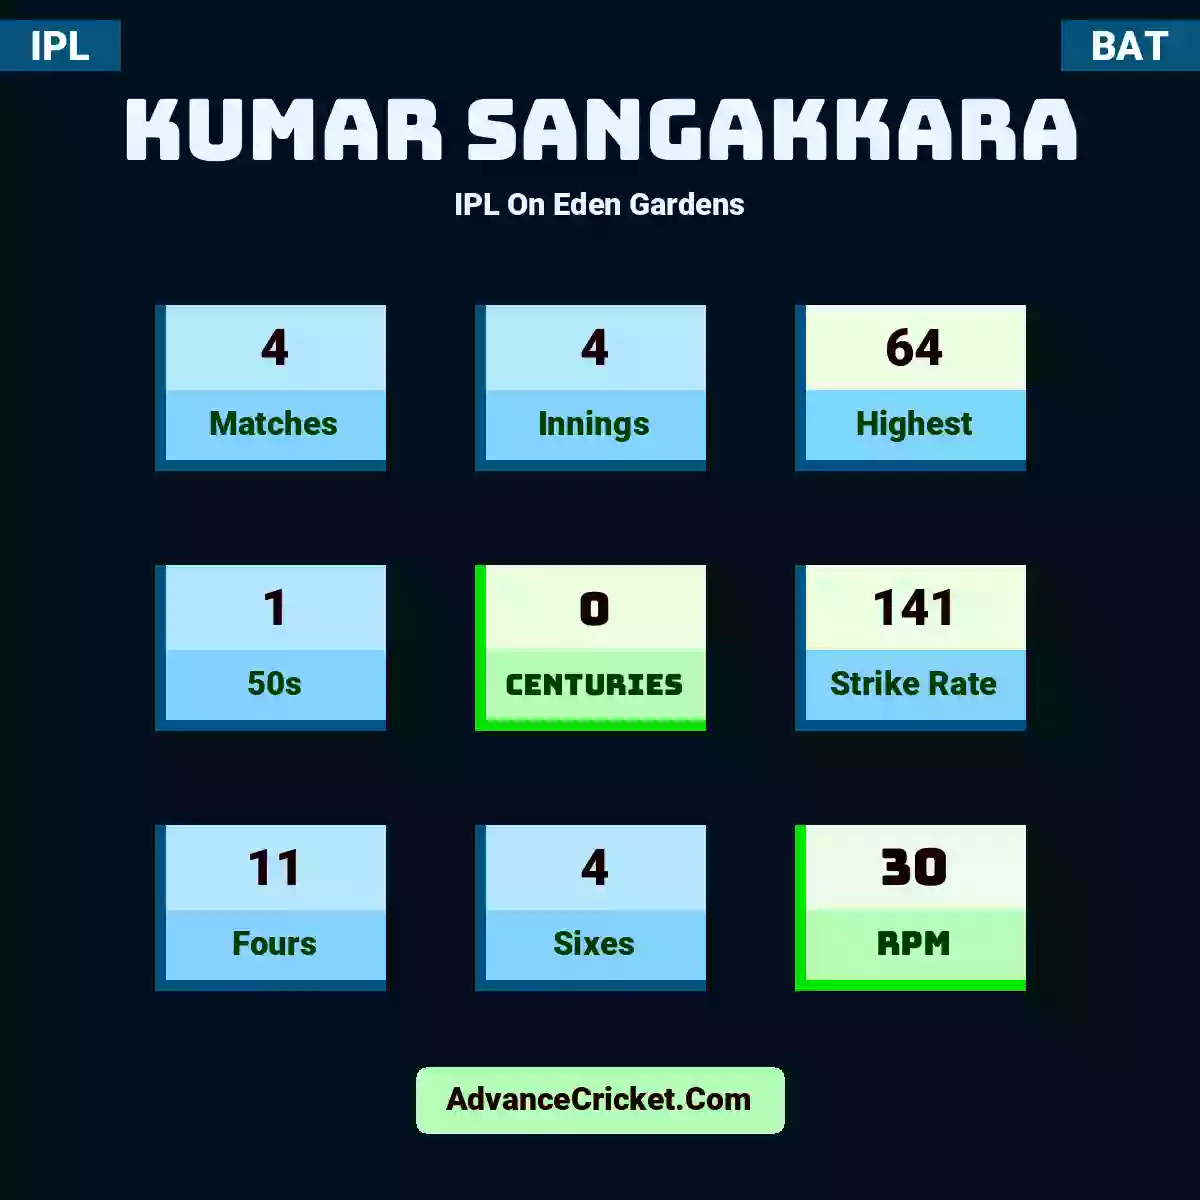 Kumar Sangakkara IPL  On Eden Gardens, Kumar Sangakkara played 4 matches, scored 64 runs as highest, 1 half-centuries, and 0 centuries, with a strike rate of 141. K.Sangakkara hit 11 fours and 4 sixes, with an RPM of 30.